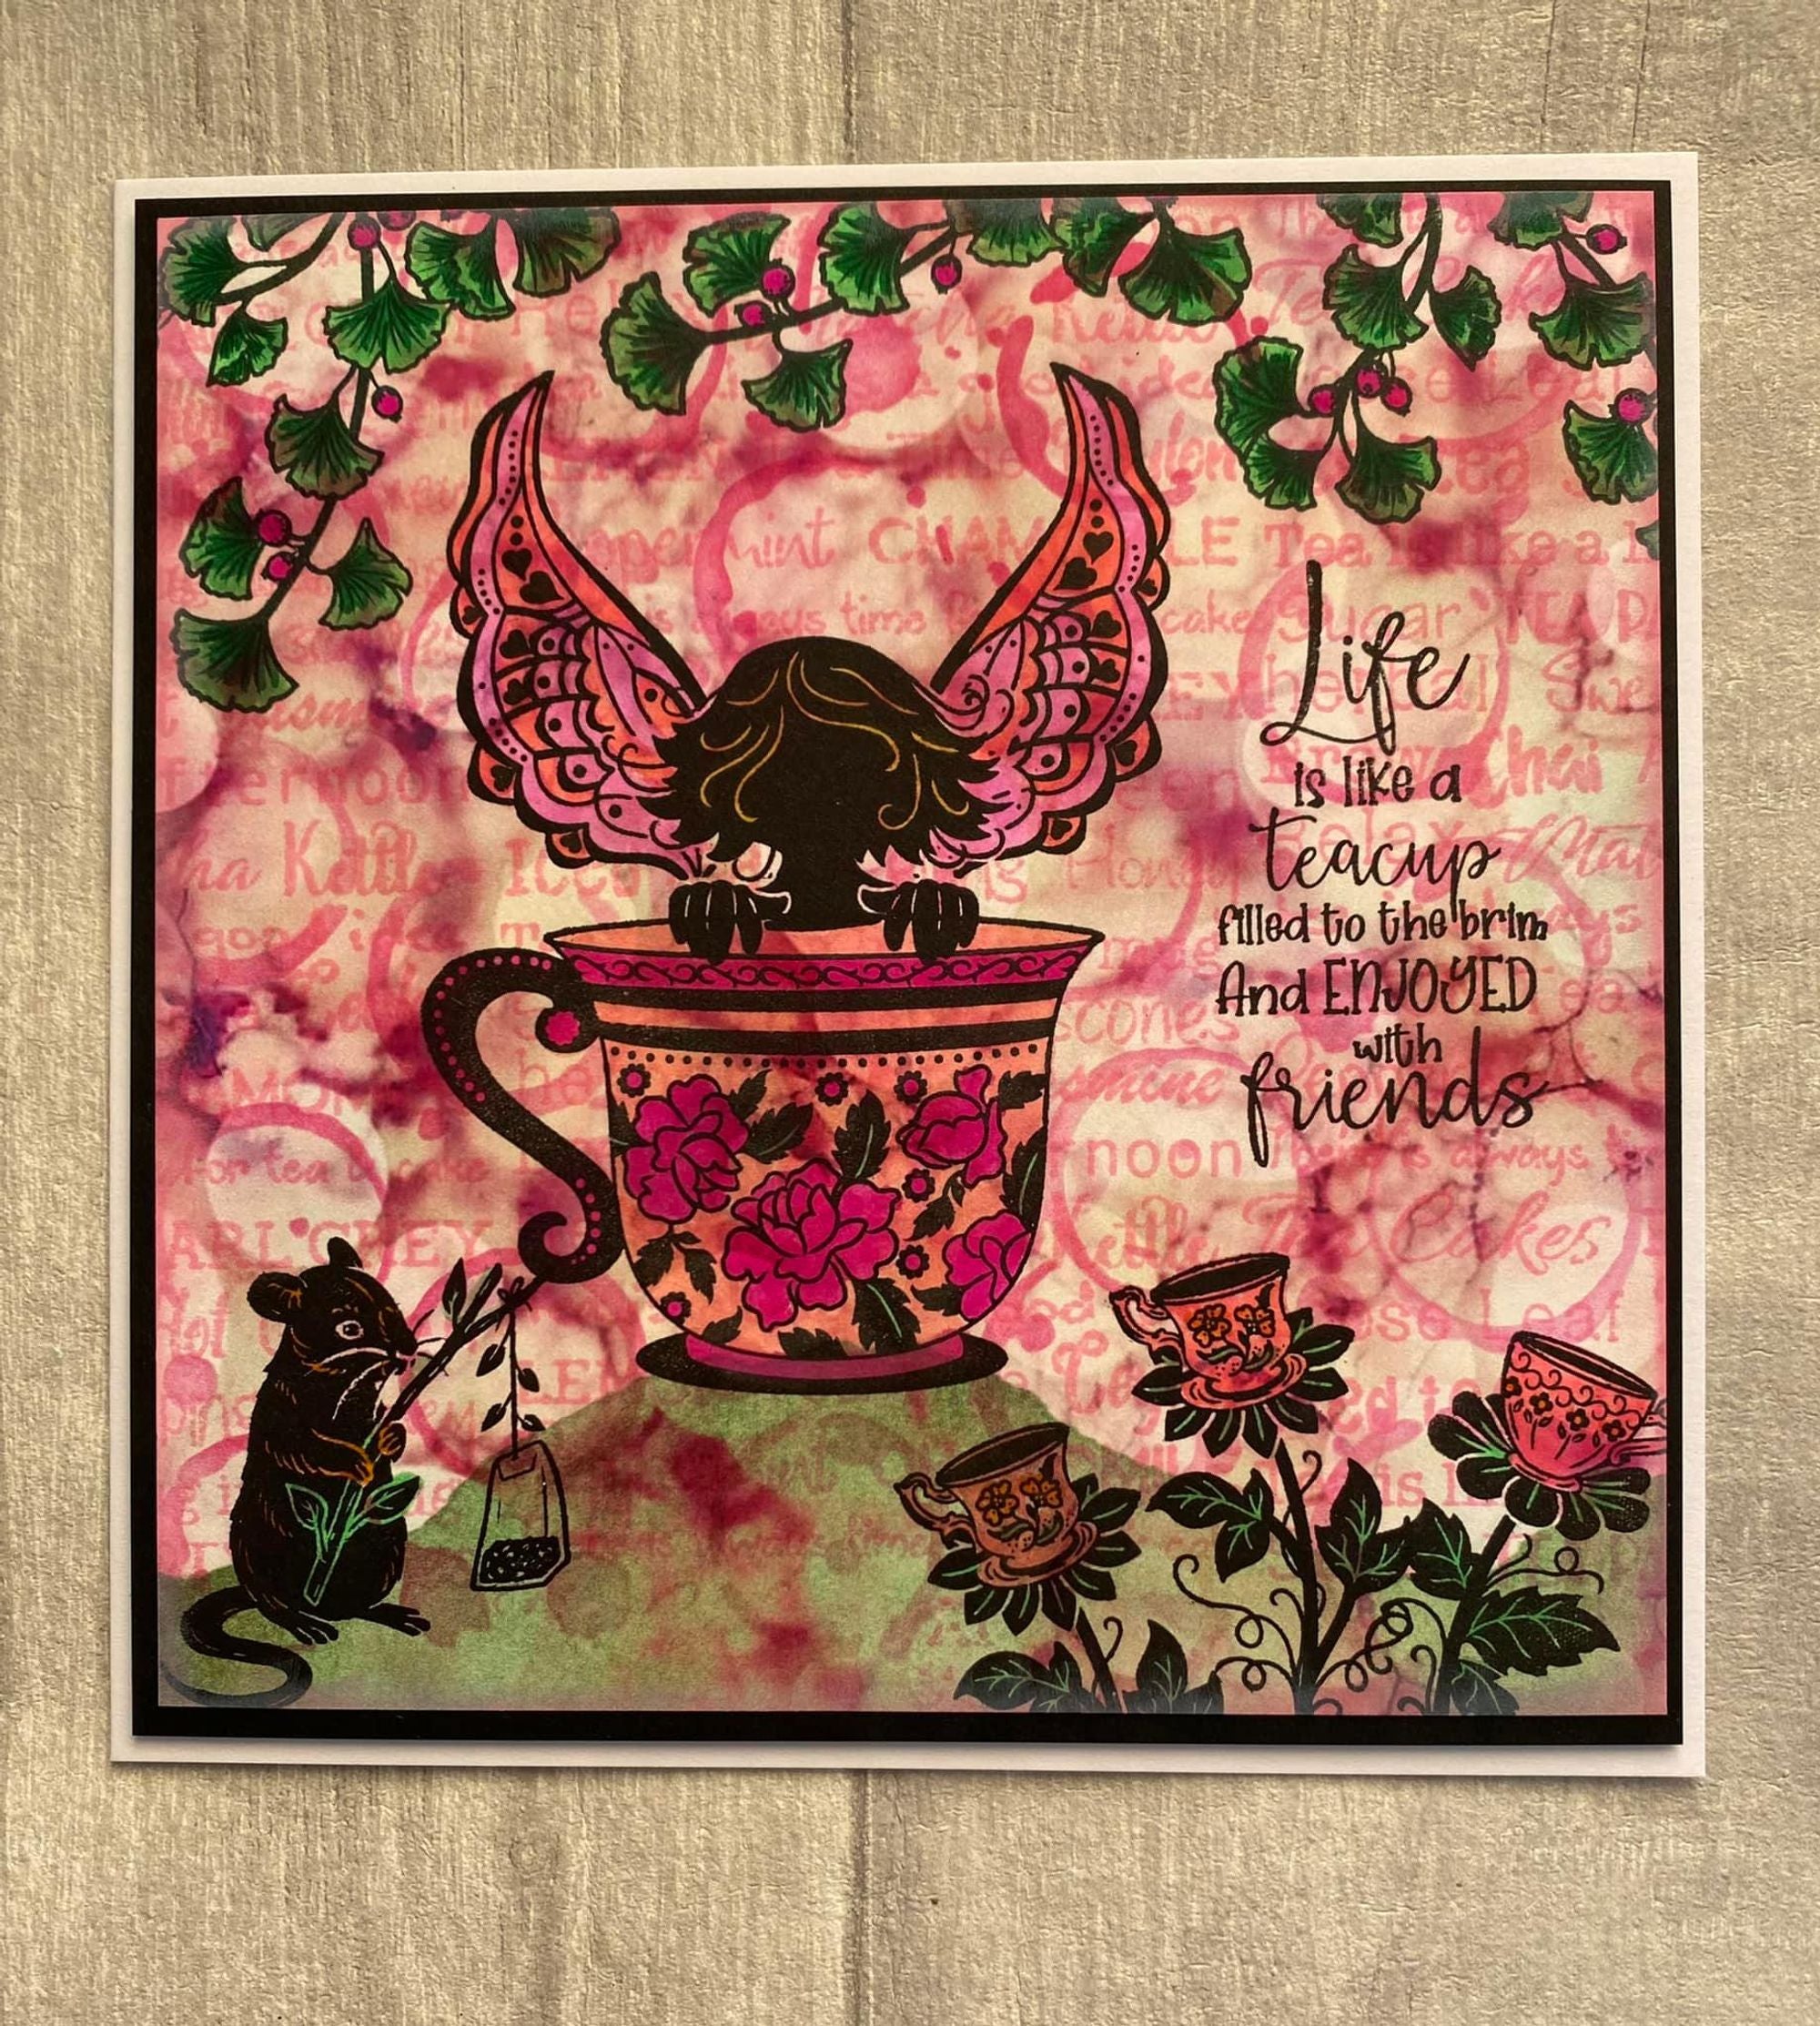 Fairy Hugs Stamps - Teacup Flowers